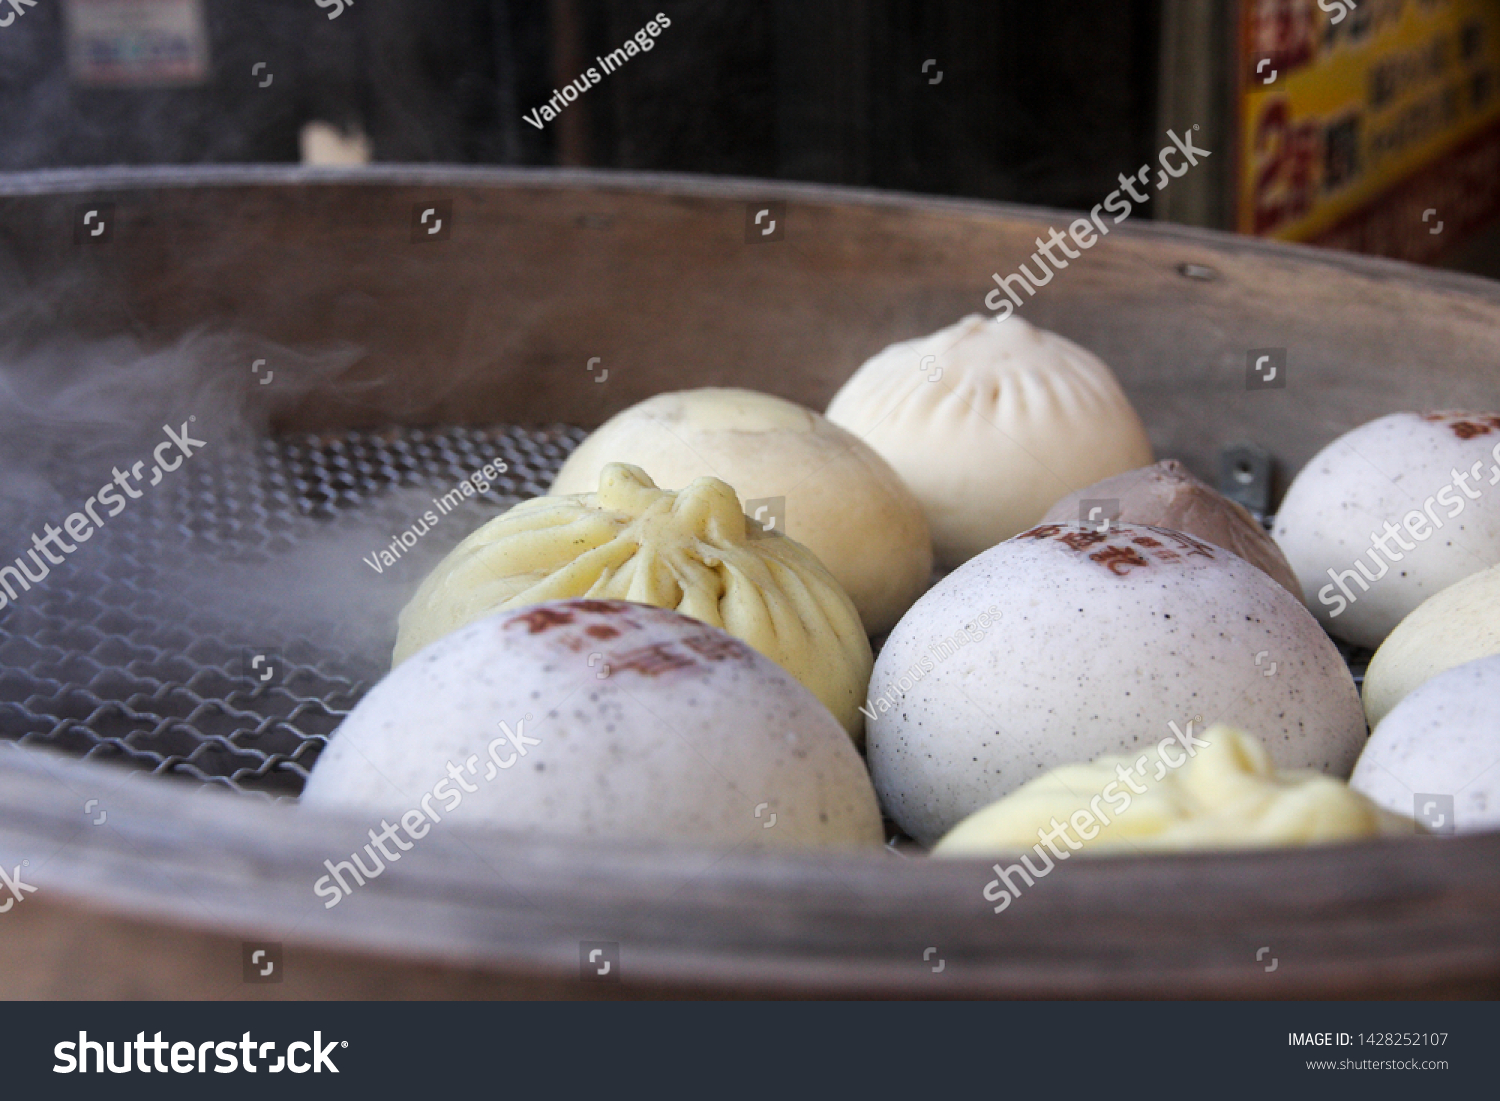 Steamed dumpling, steamed stuff bun. Popular Chinese food. #1428252107